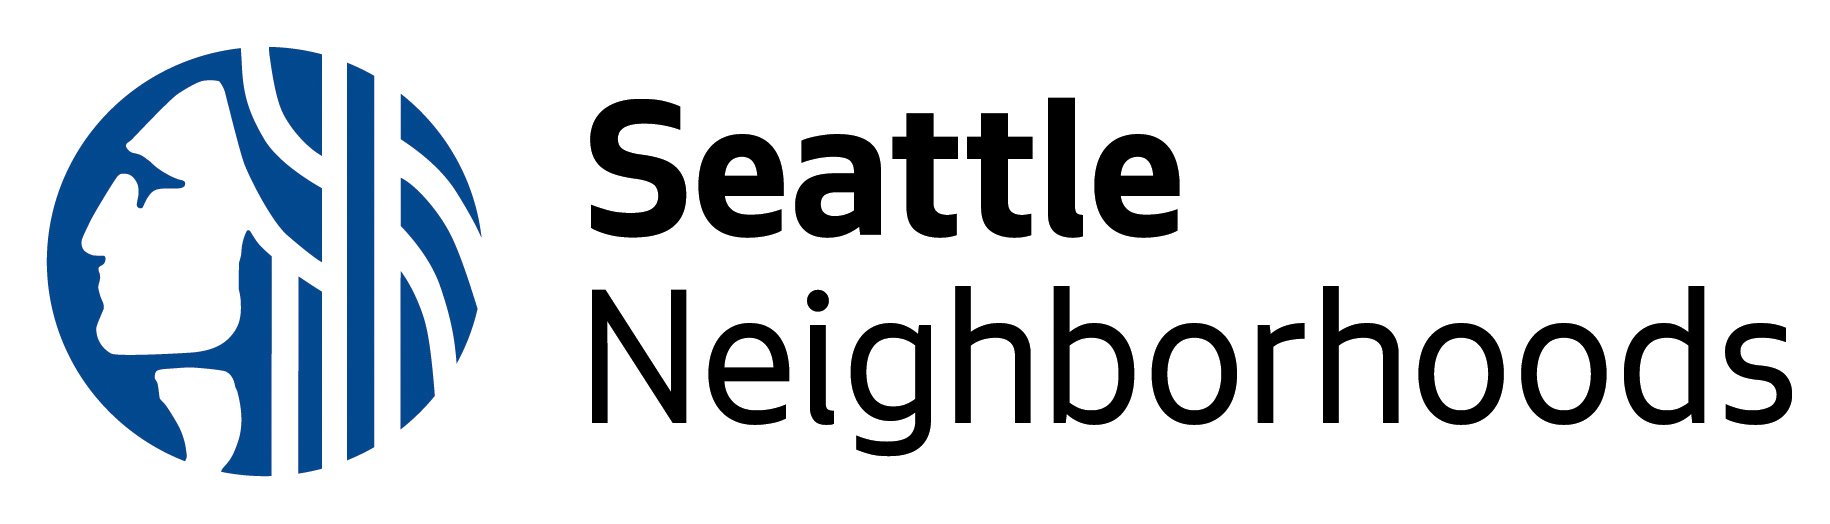 Department of Neighborhoods City of Seattle 